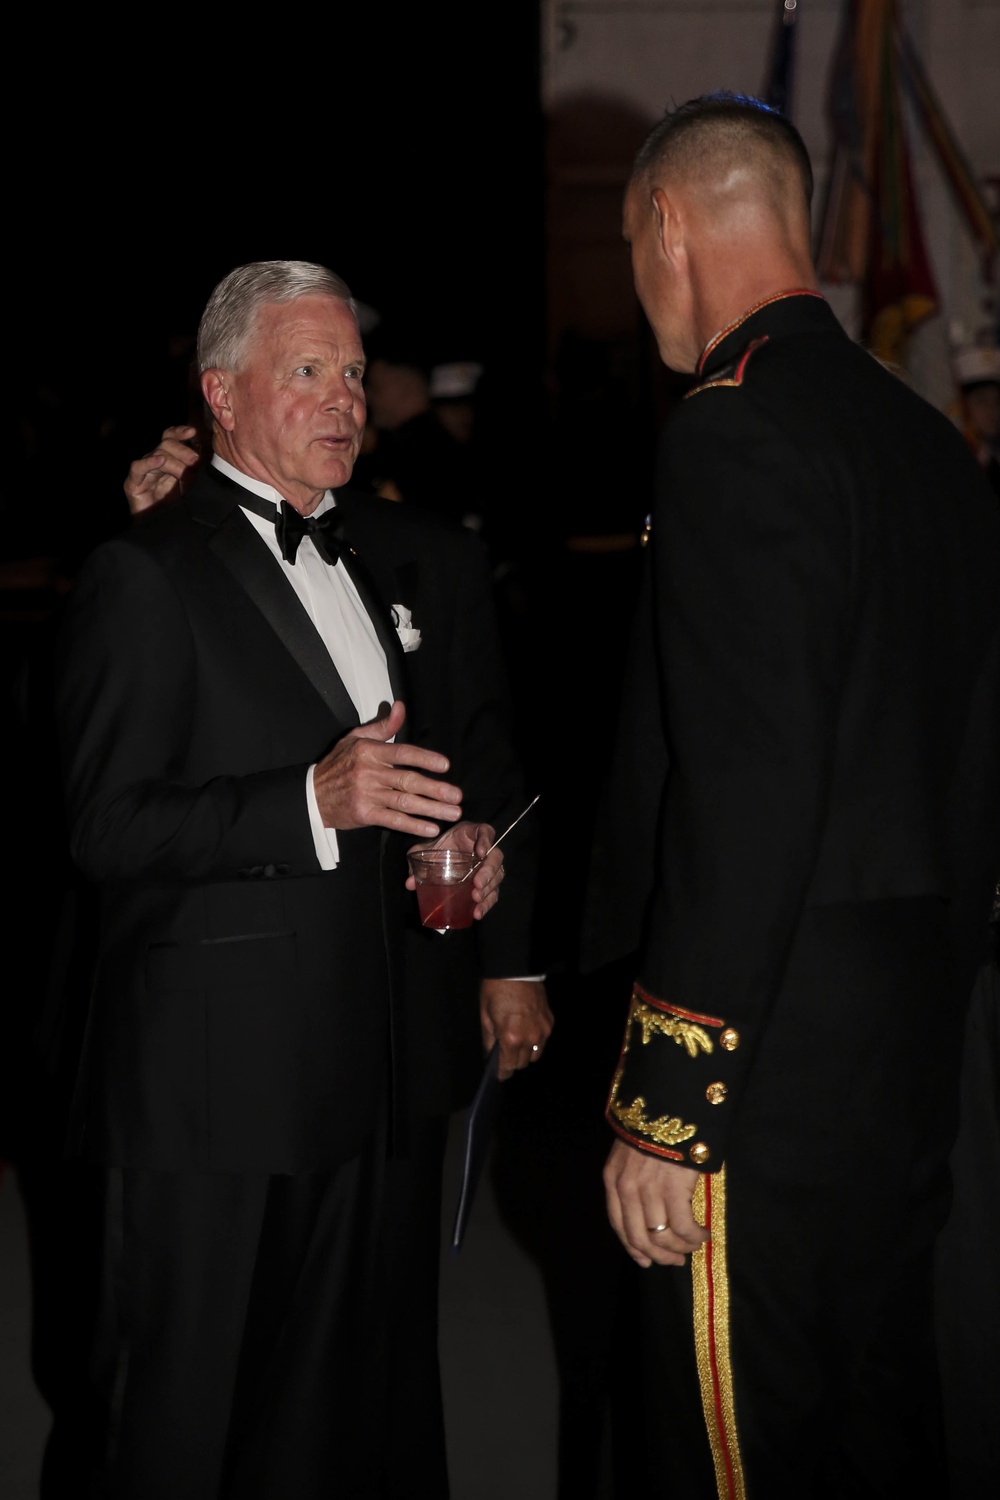 MAG-31 celebrates Marine Corps birthday with 35th Commandant